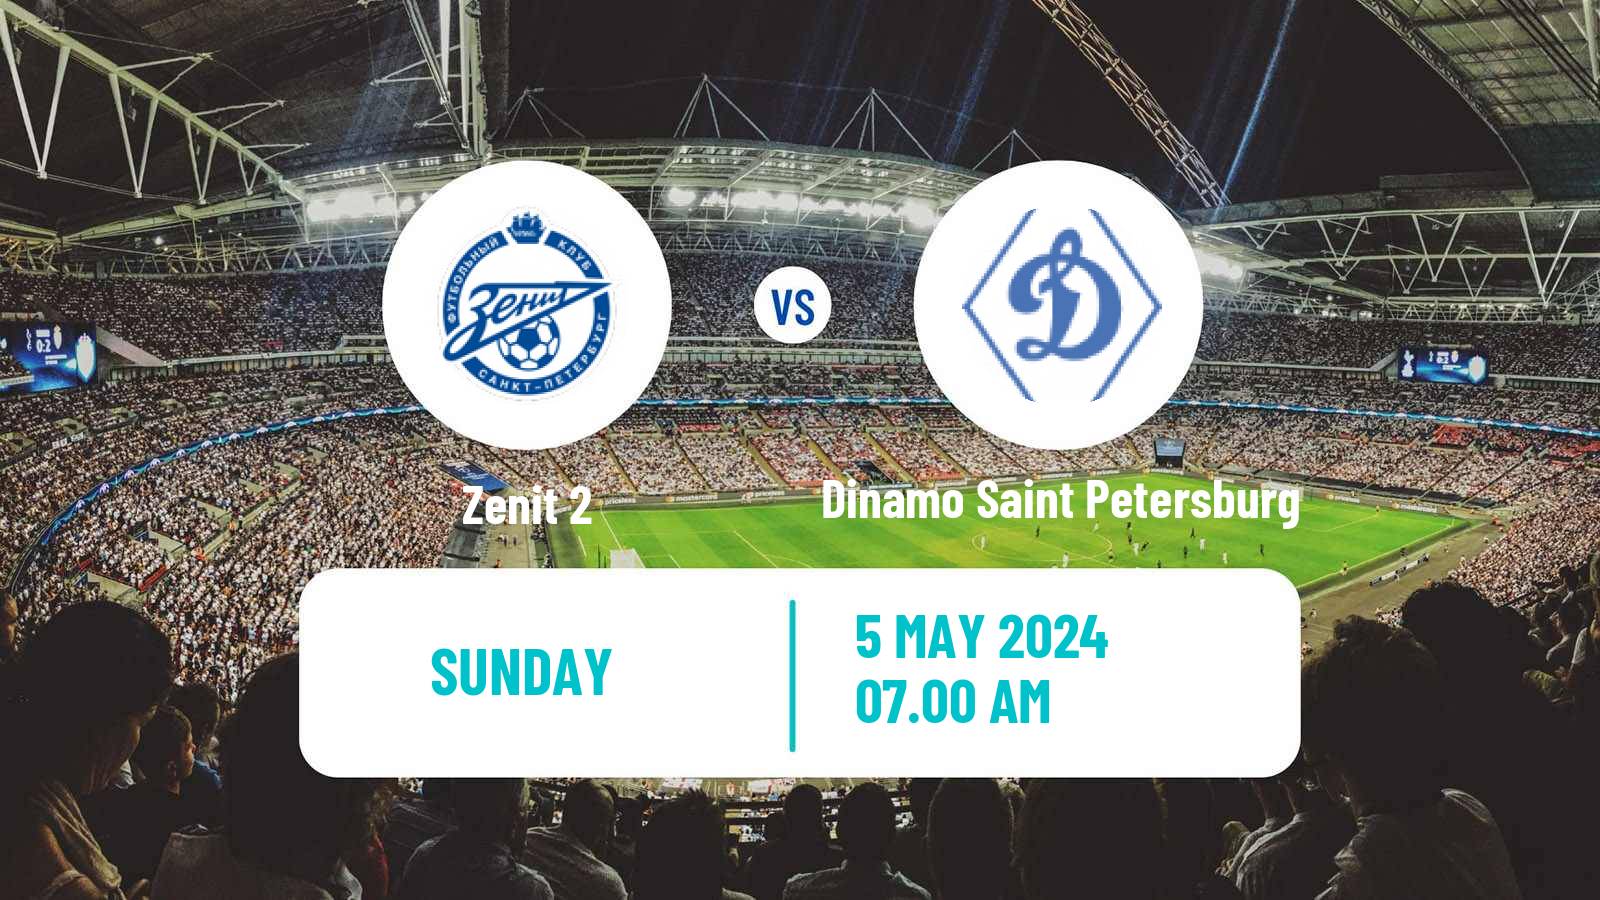 Soccer FNL 2 Division B Group 2 Zenit 2 - Dinamo Saint Petersburg